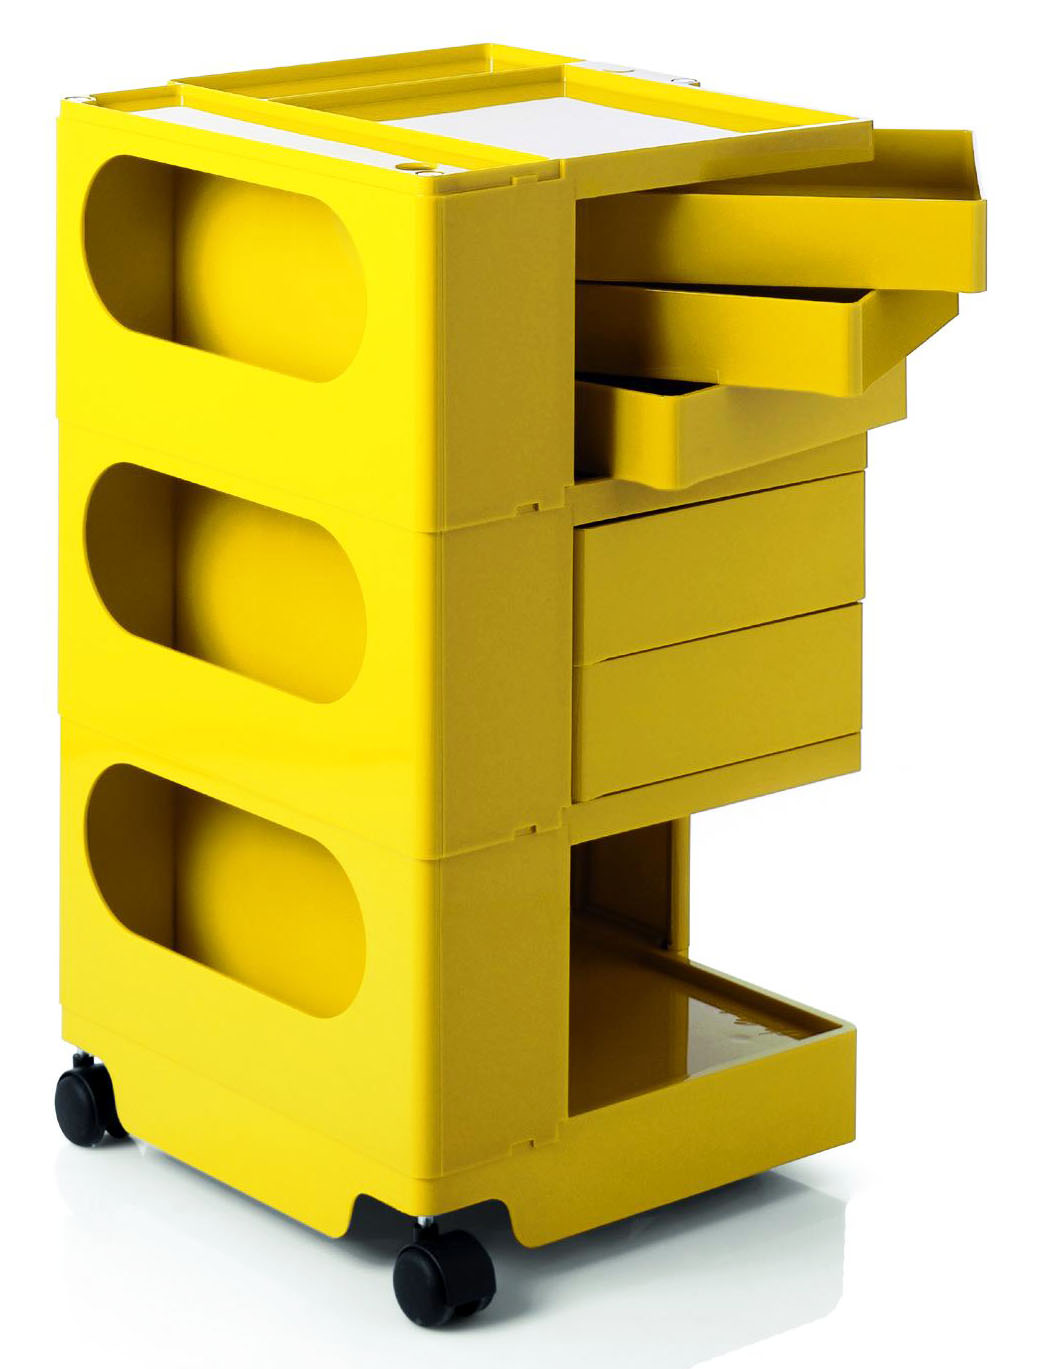 Joe Colombo Boby Trolley | modern design by moderndesign.org